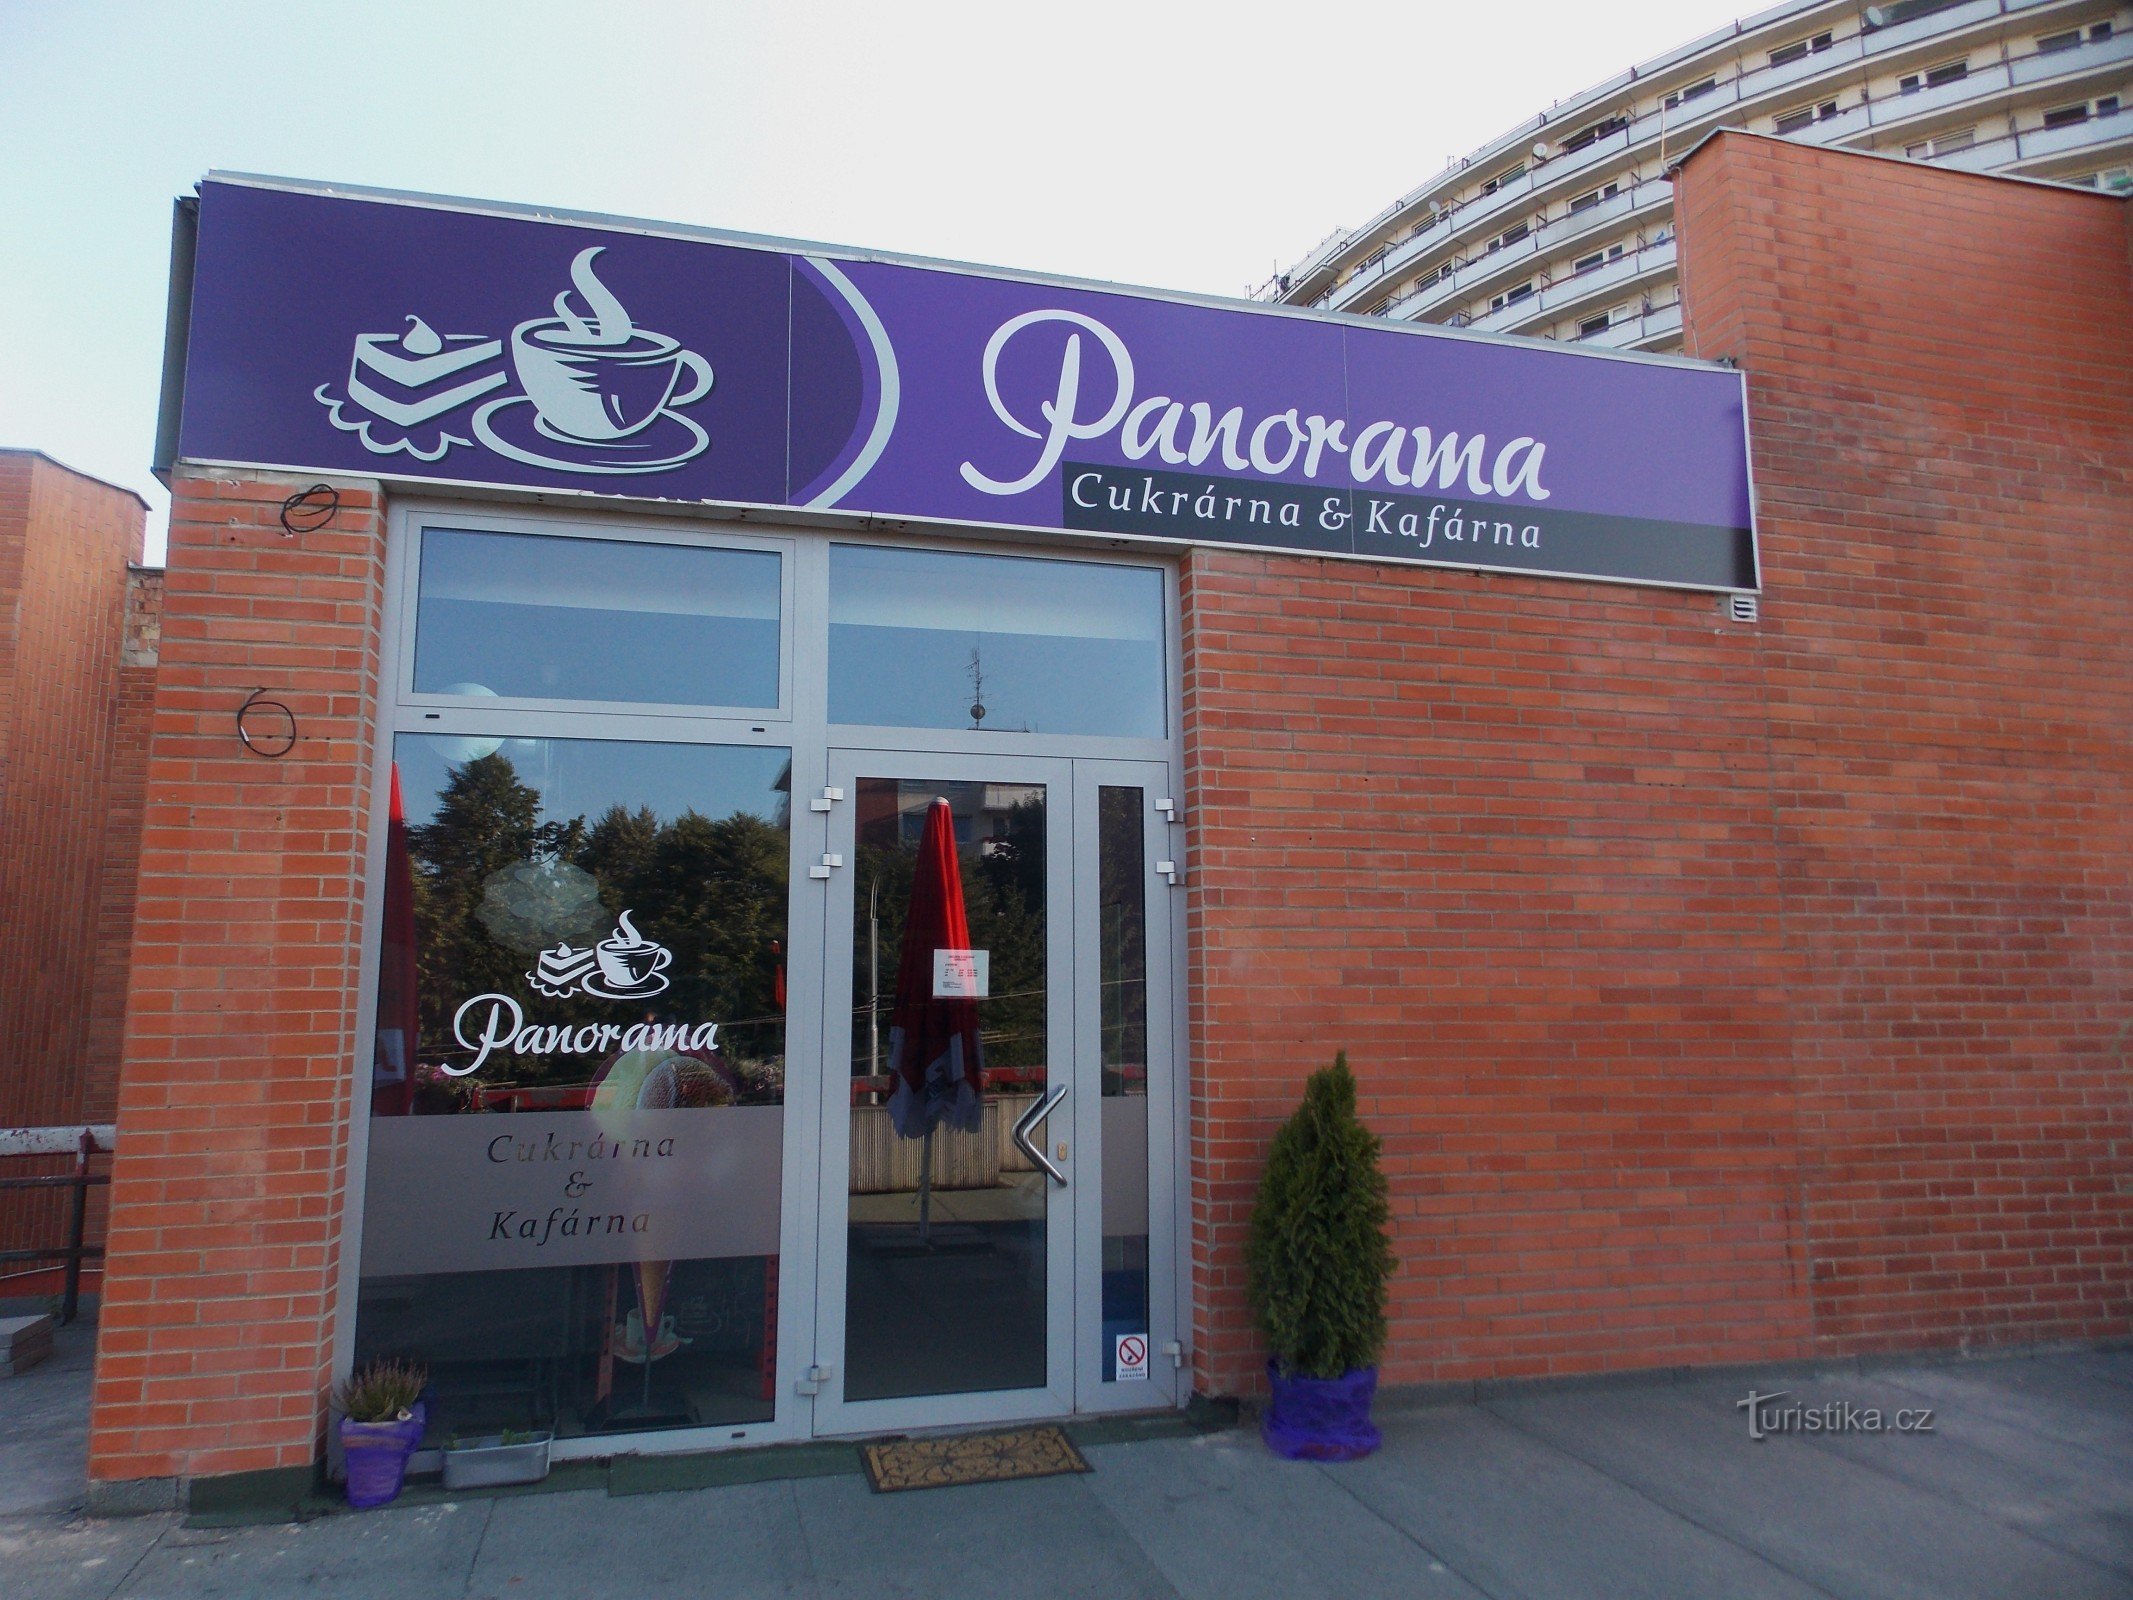 Makeiset - Café Panorama Zlínissa